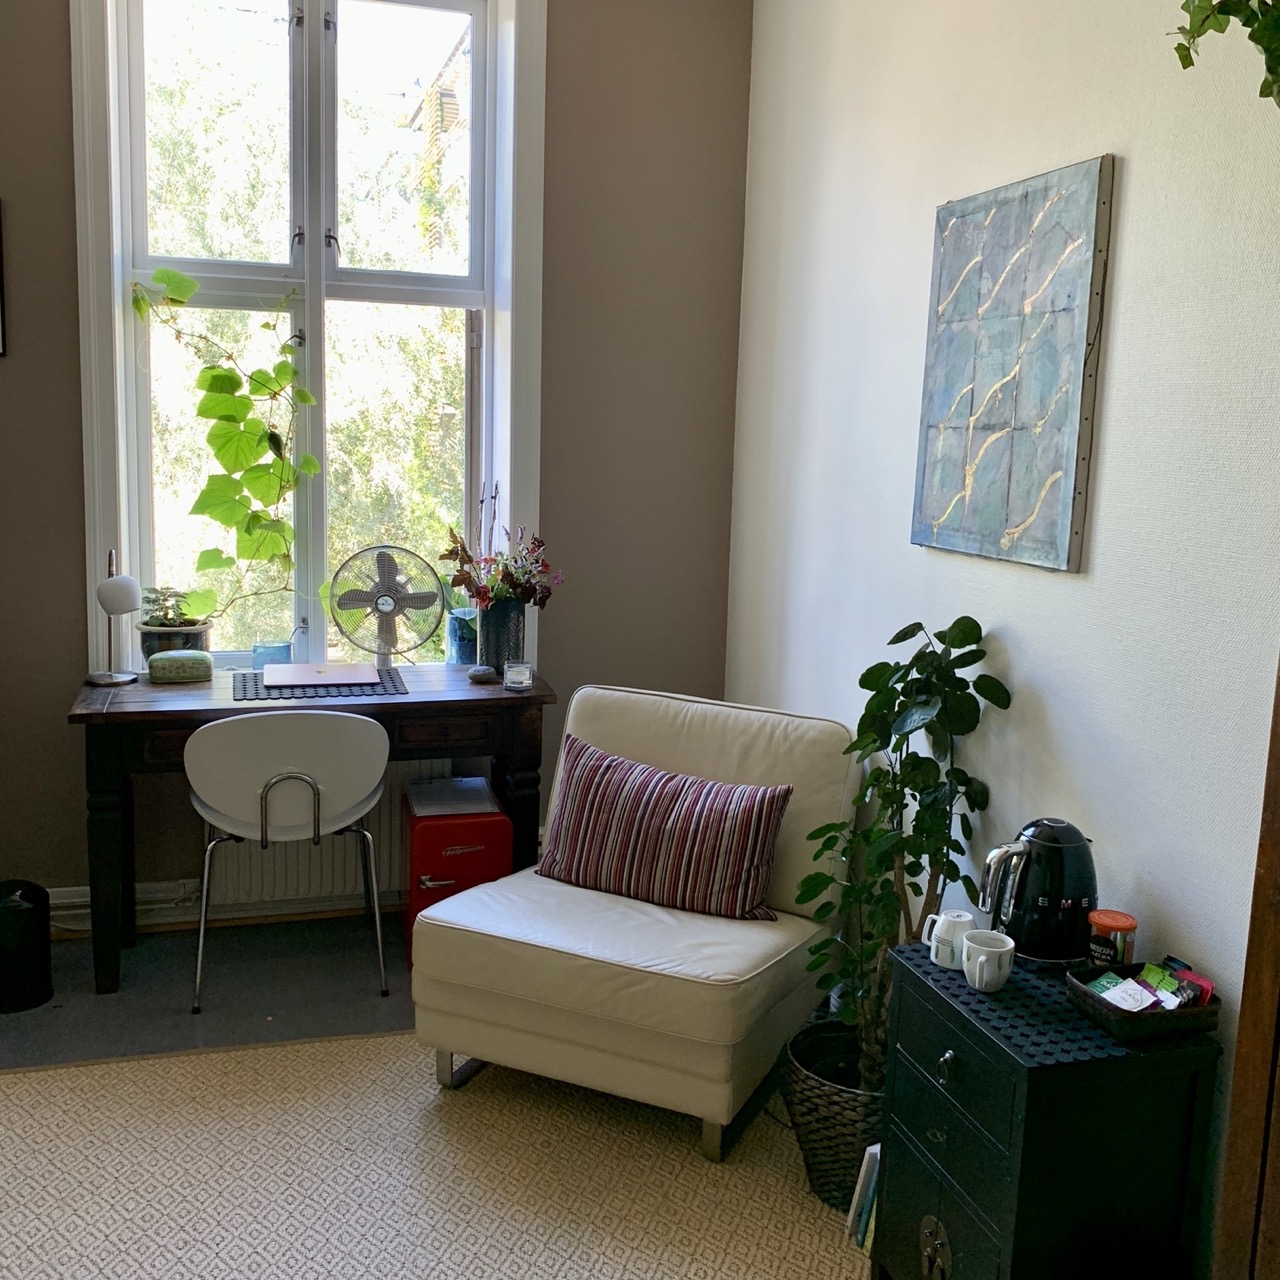 Waiting room of Gestalt therapist Kim Hough